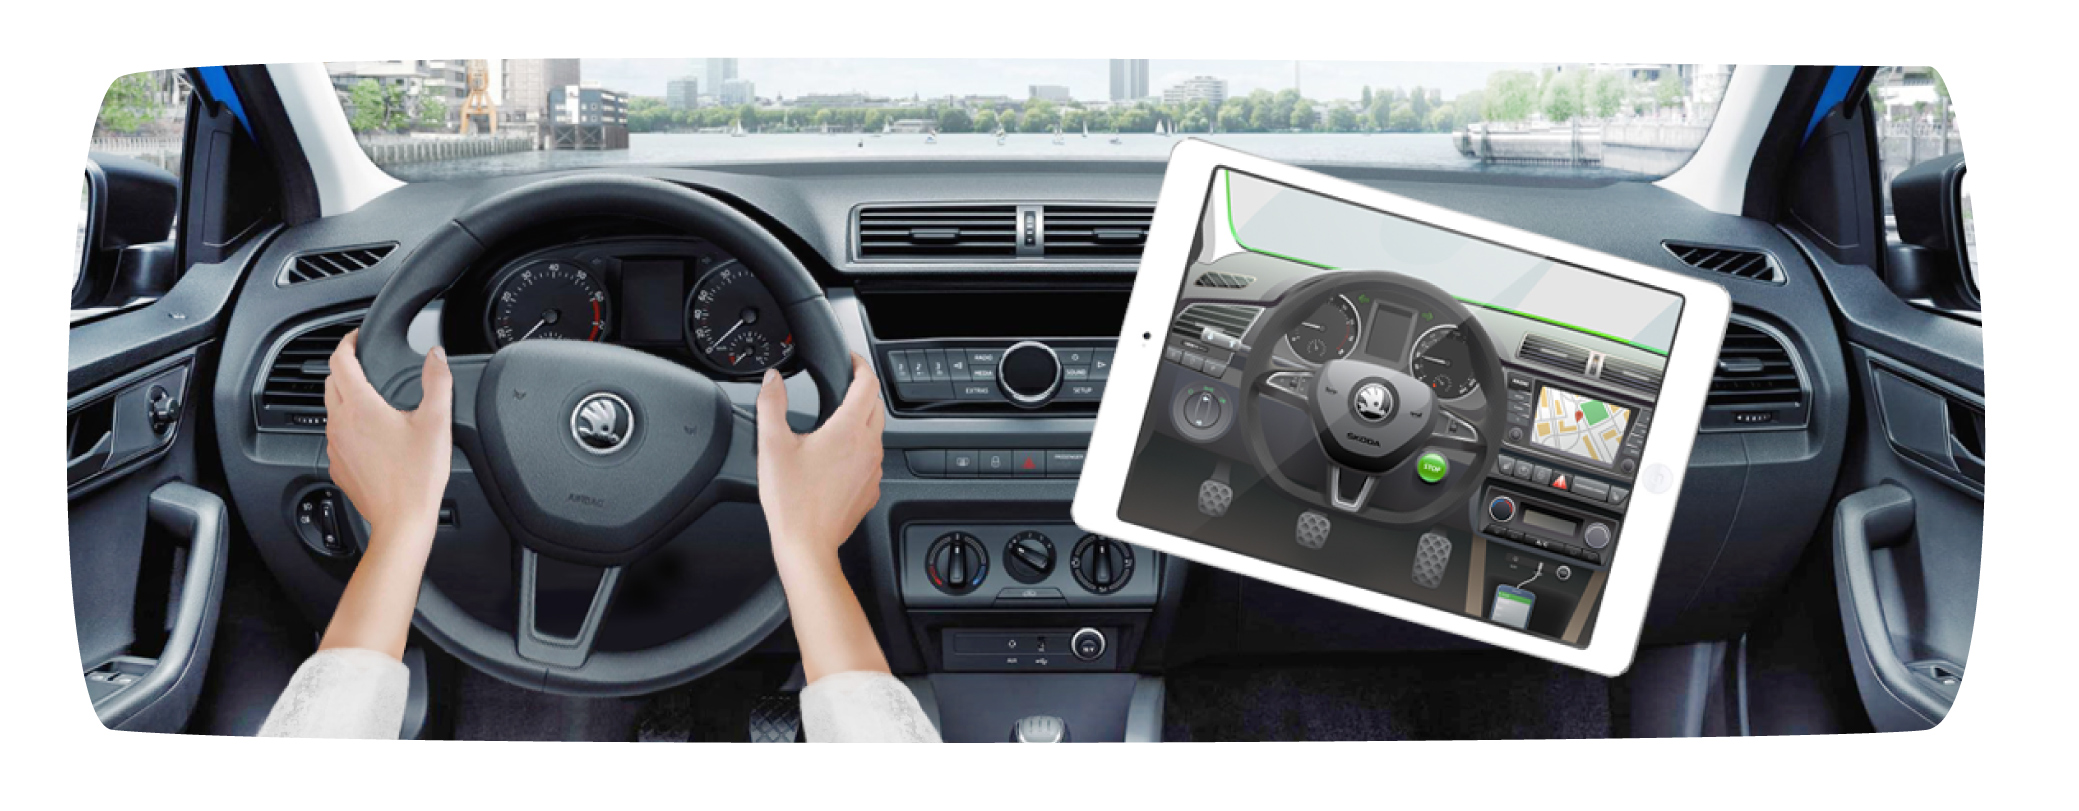 Škoda and Bamboo Apps: Little Driver (Sponsored)